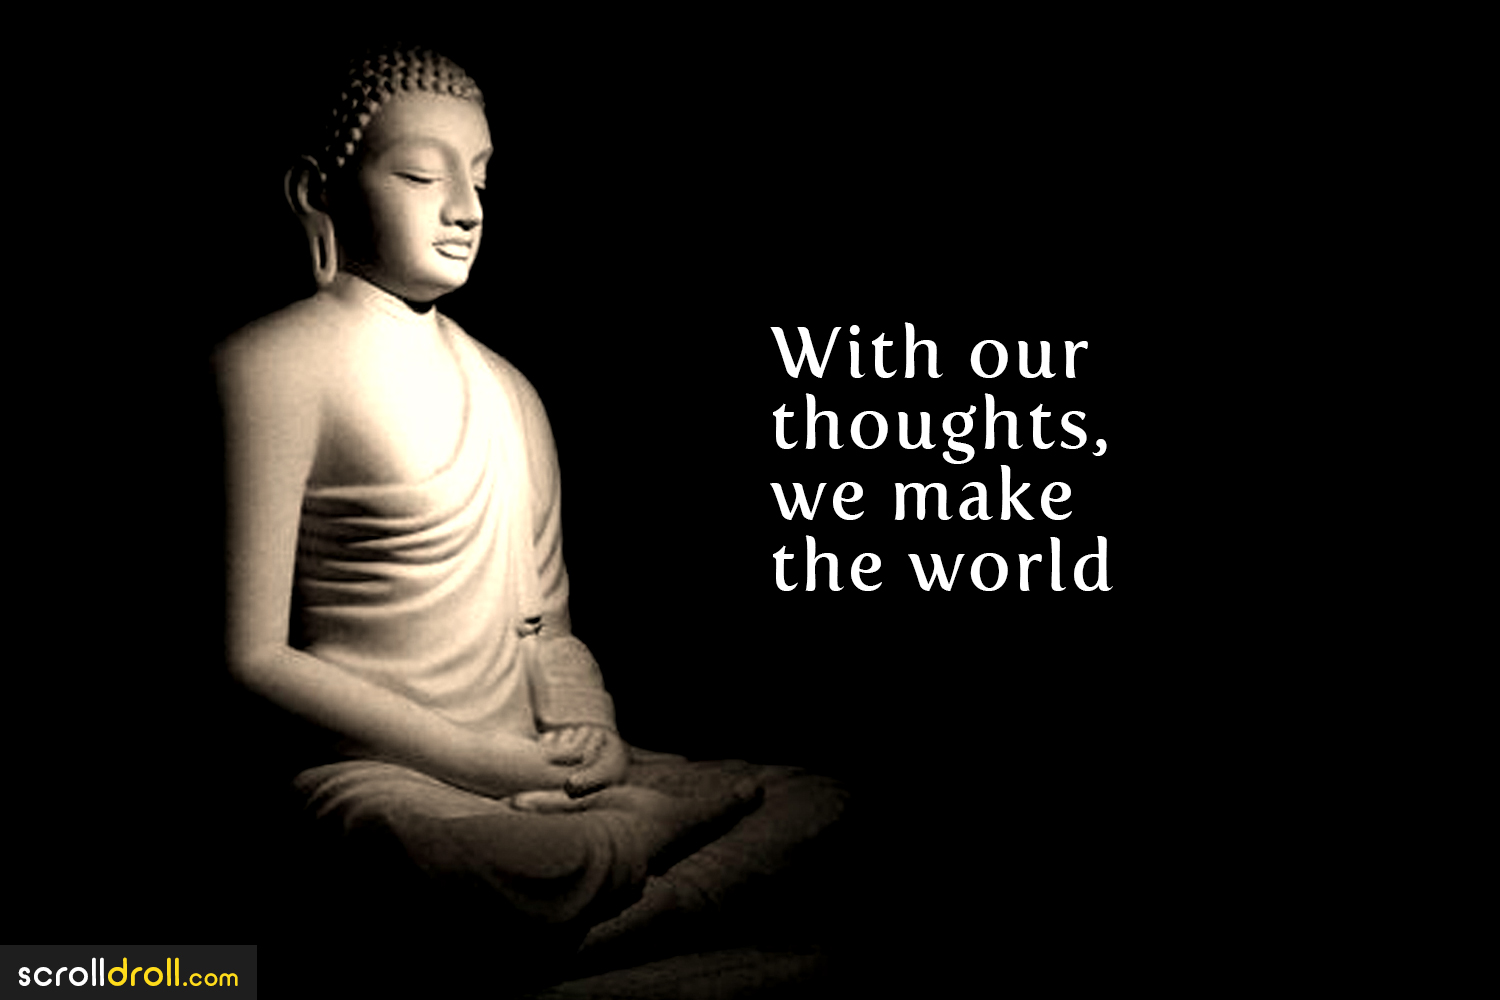 16 Best Gautama Buddha Quotes On Love, Life & Peace